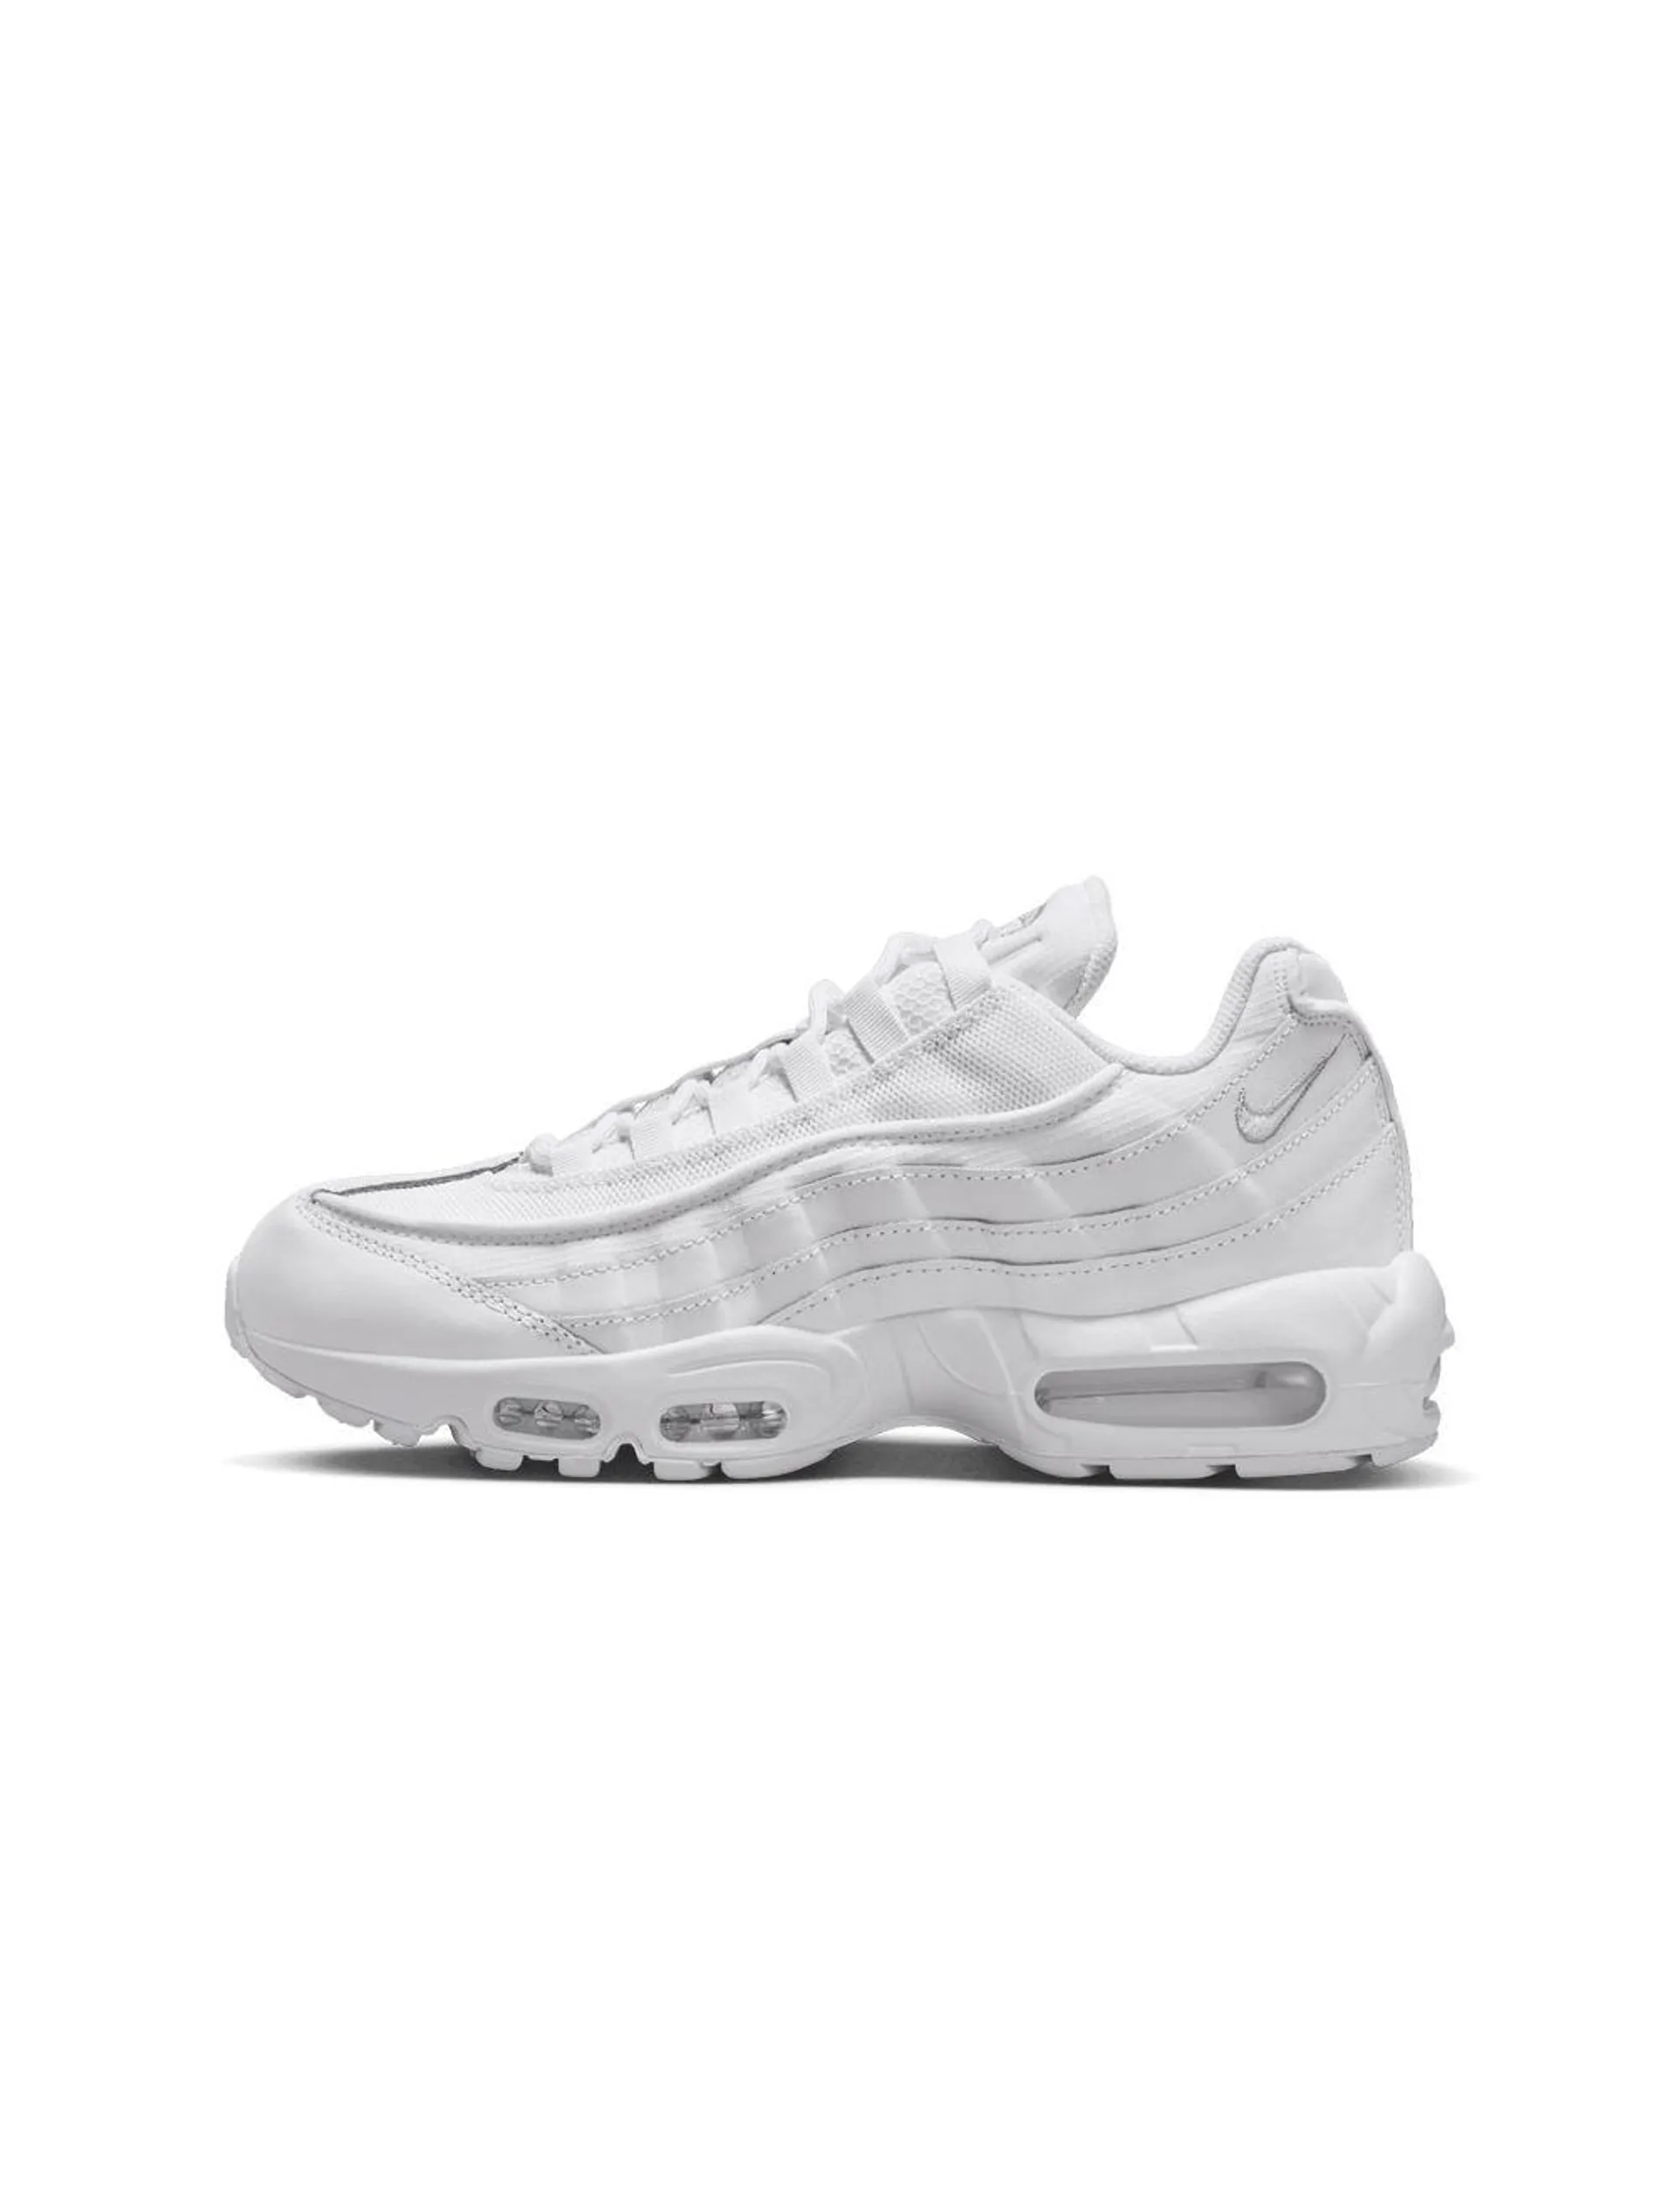 Nike Air Max 95 Essential Men's Shoe White/Grey Fog/White